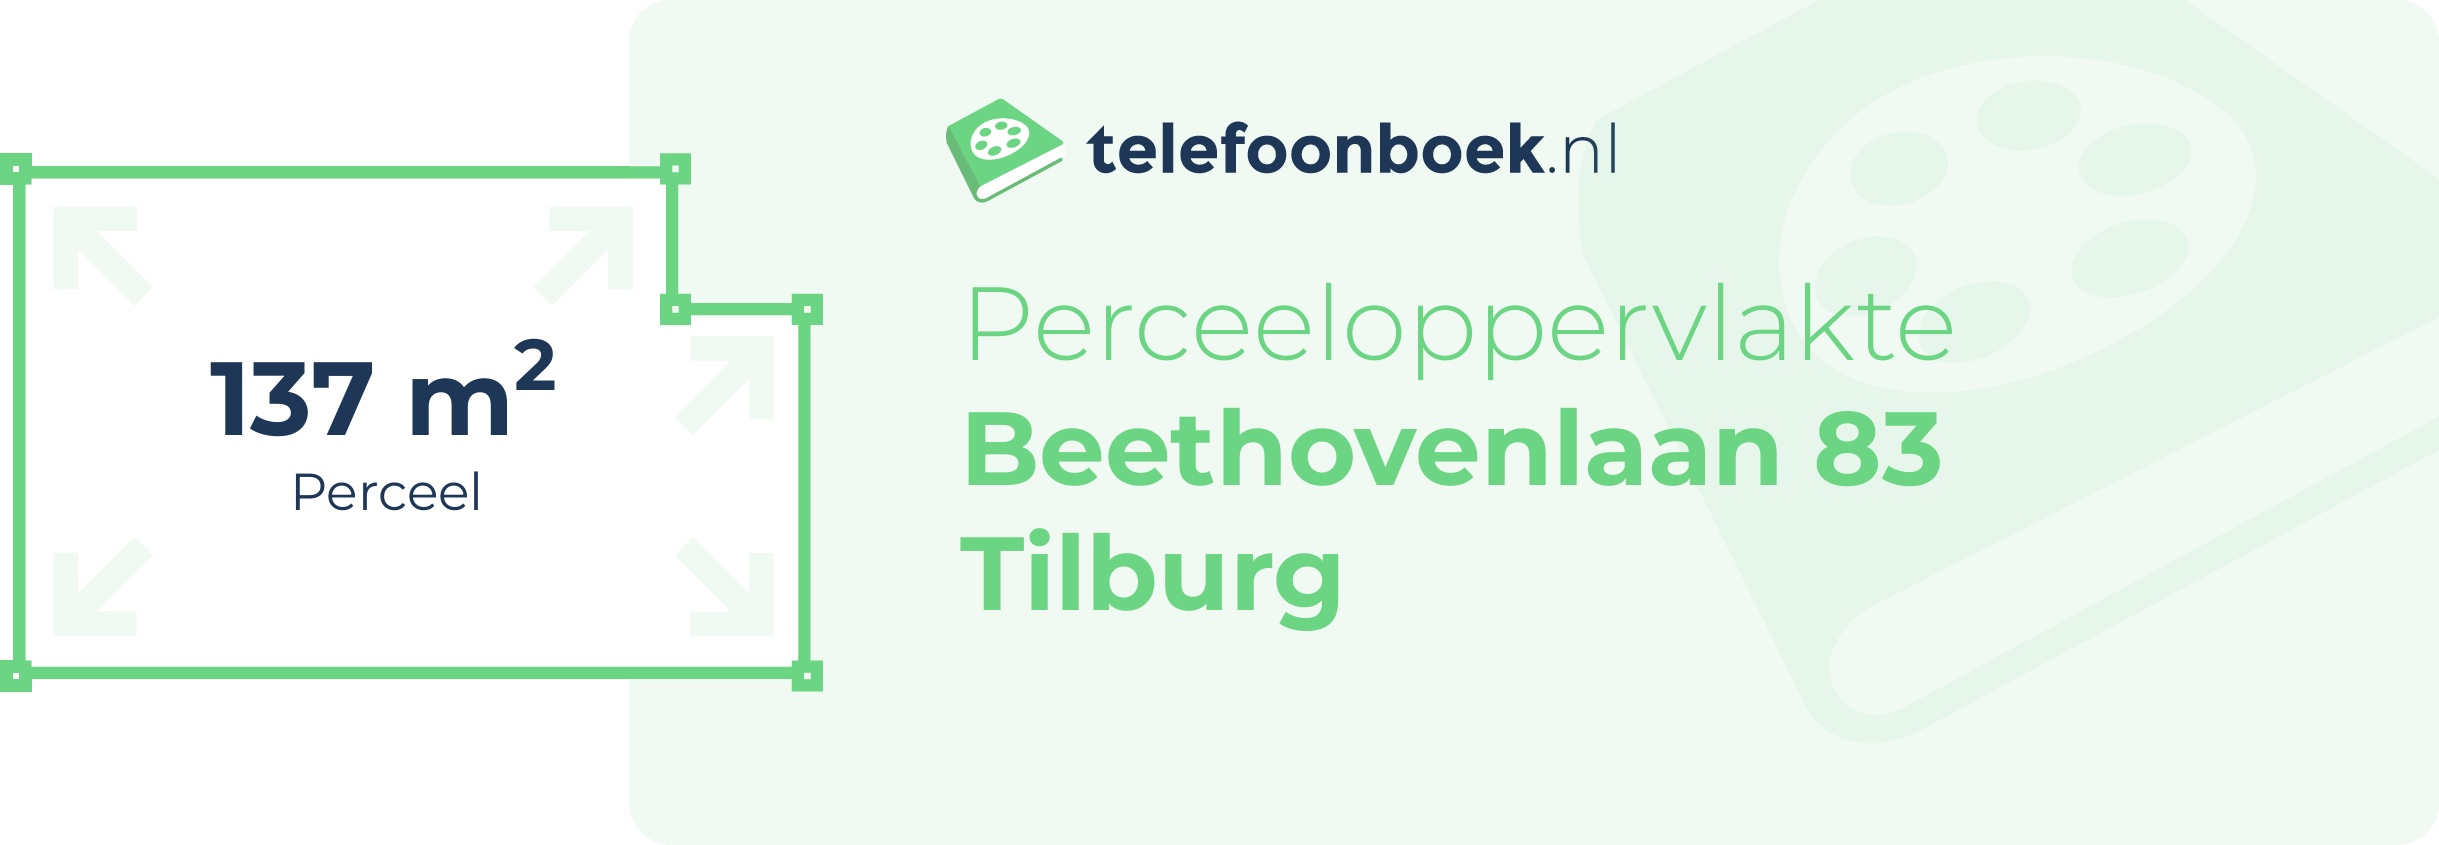 Perceeloppervlakte Beethovenlaan 83 Tilburg